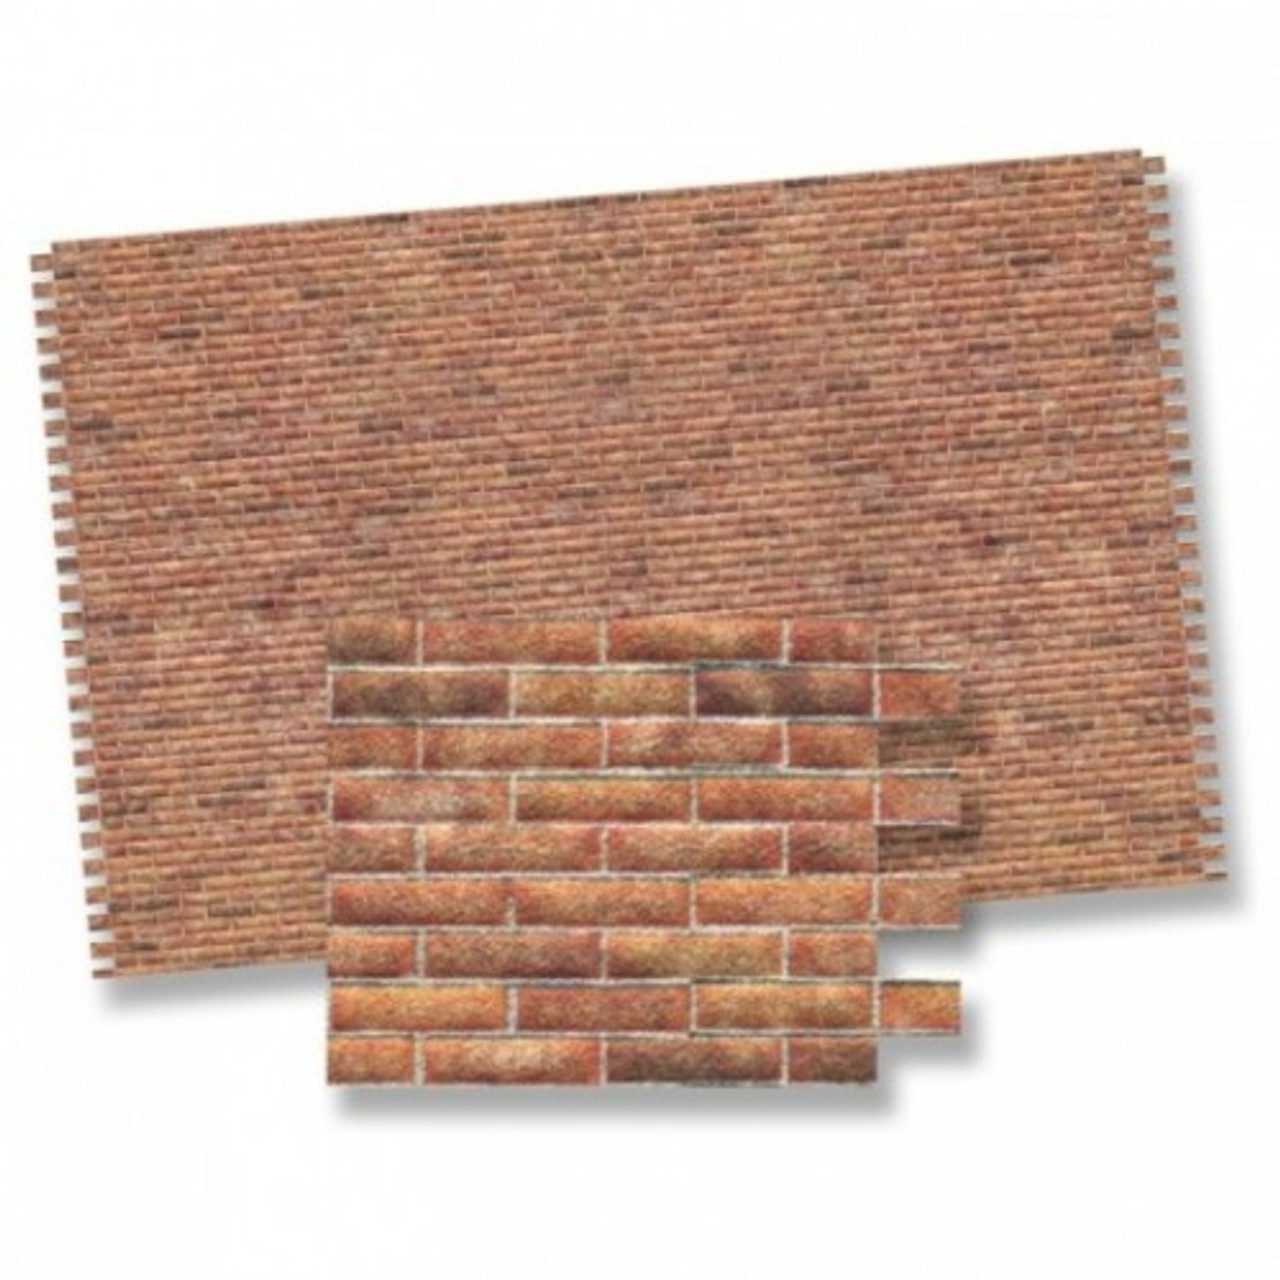 Brick Wall Material (WM34977)